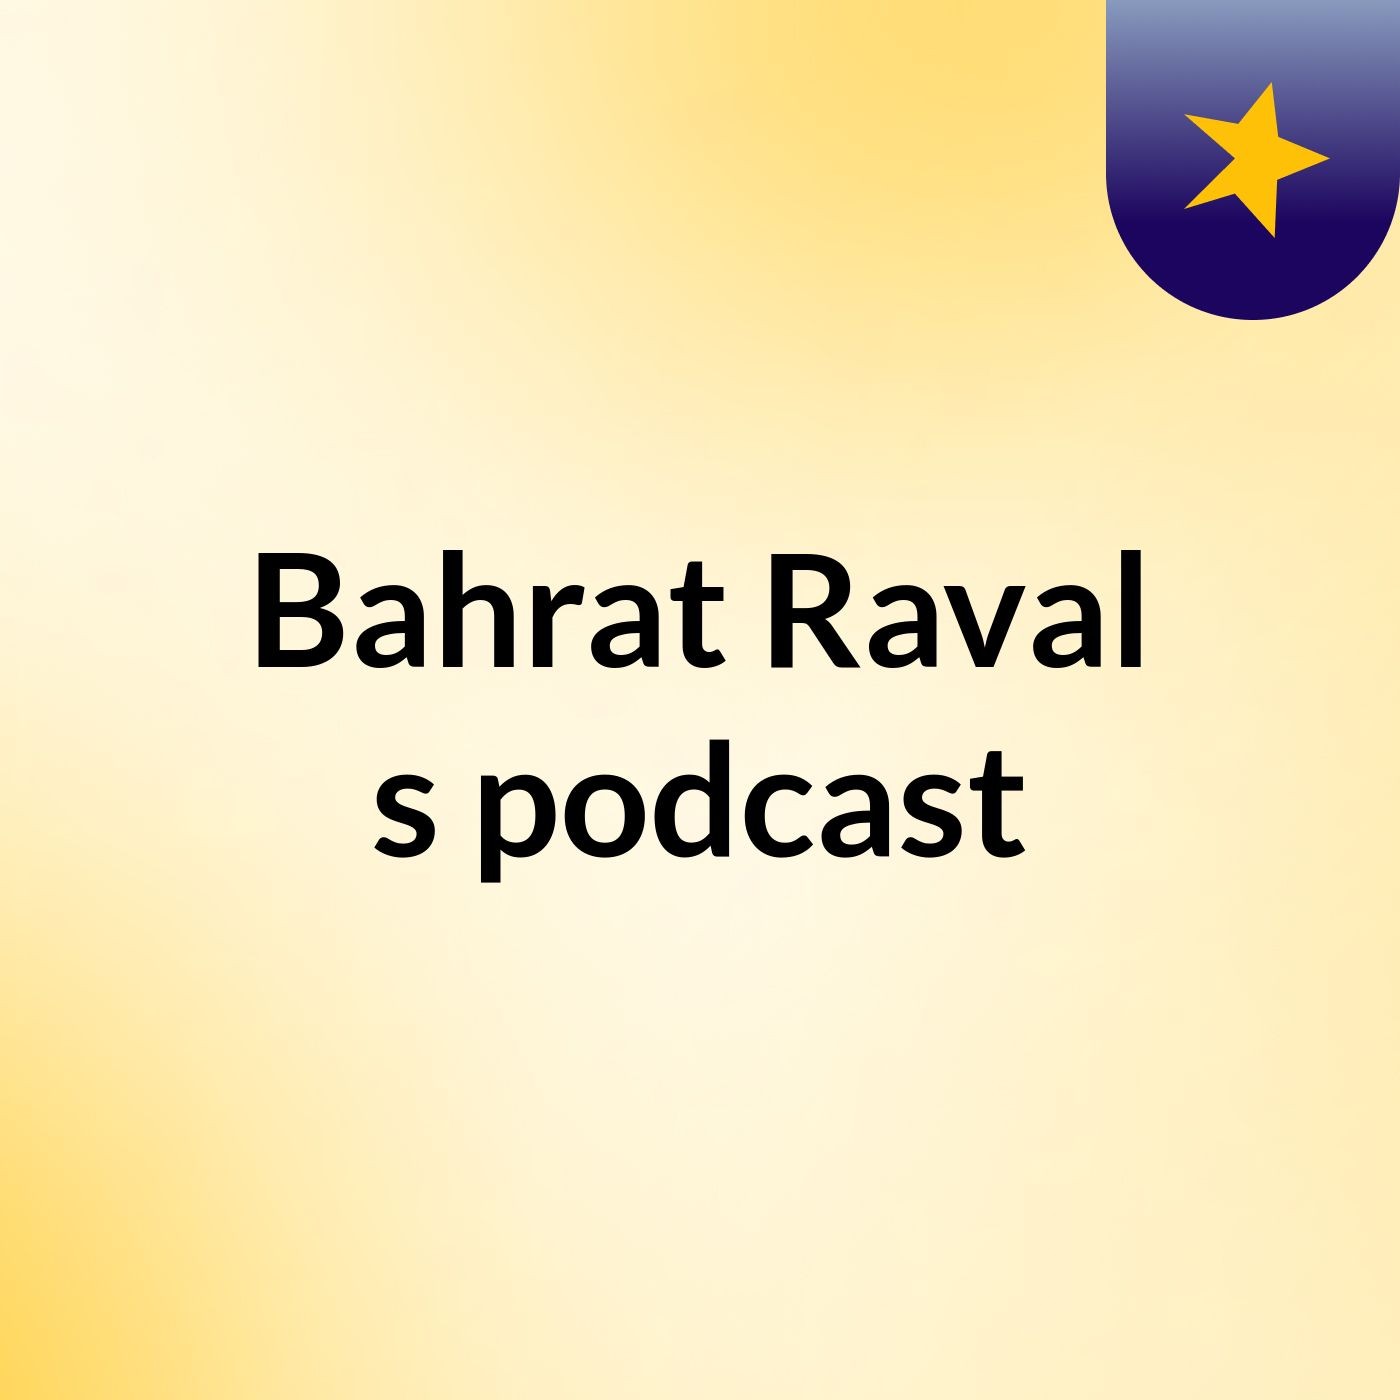 Bahrat Raval's podcast